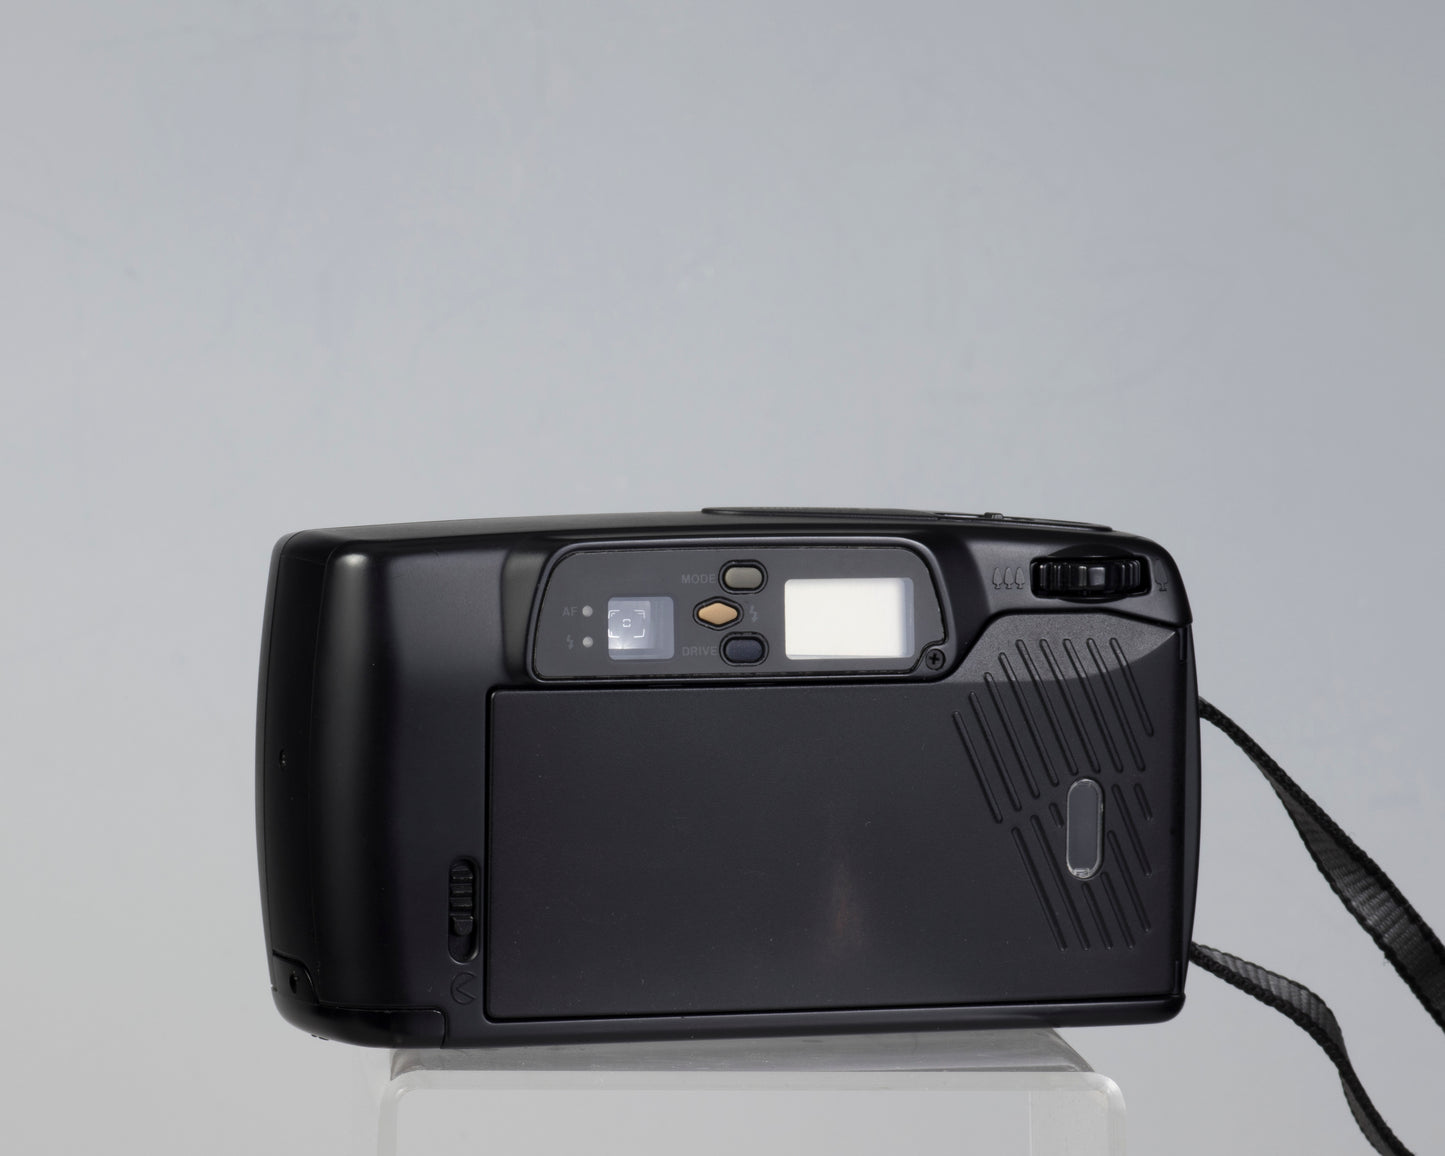 Pentax Zoom70-R 35mm film camera w/case (serial 3675866)